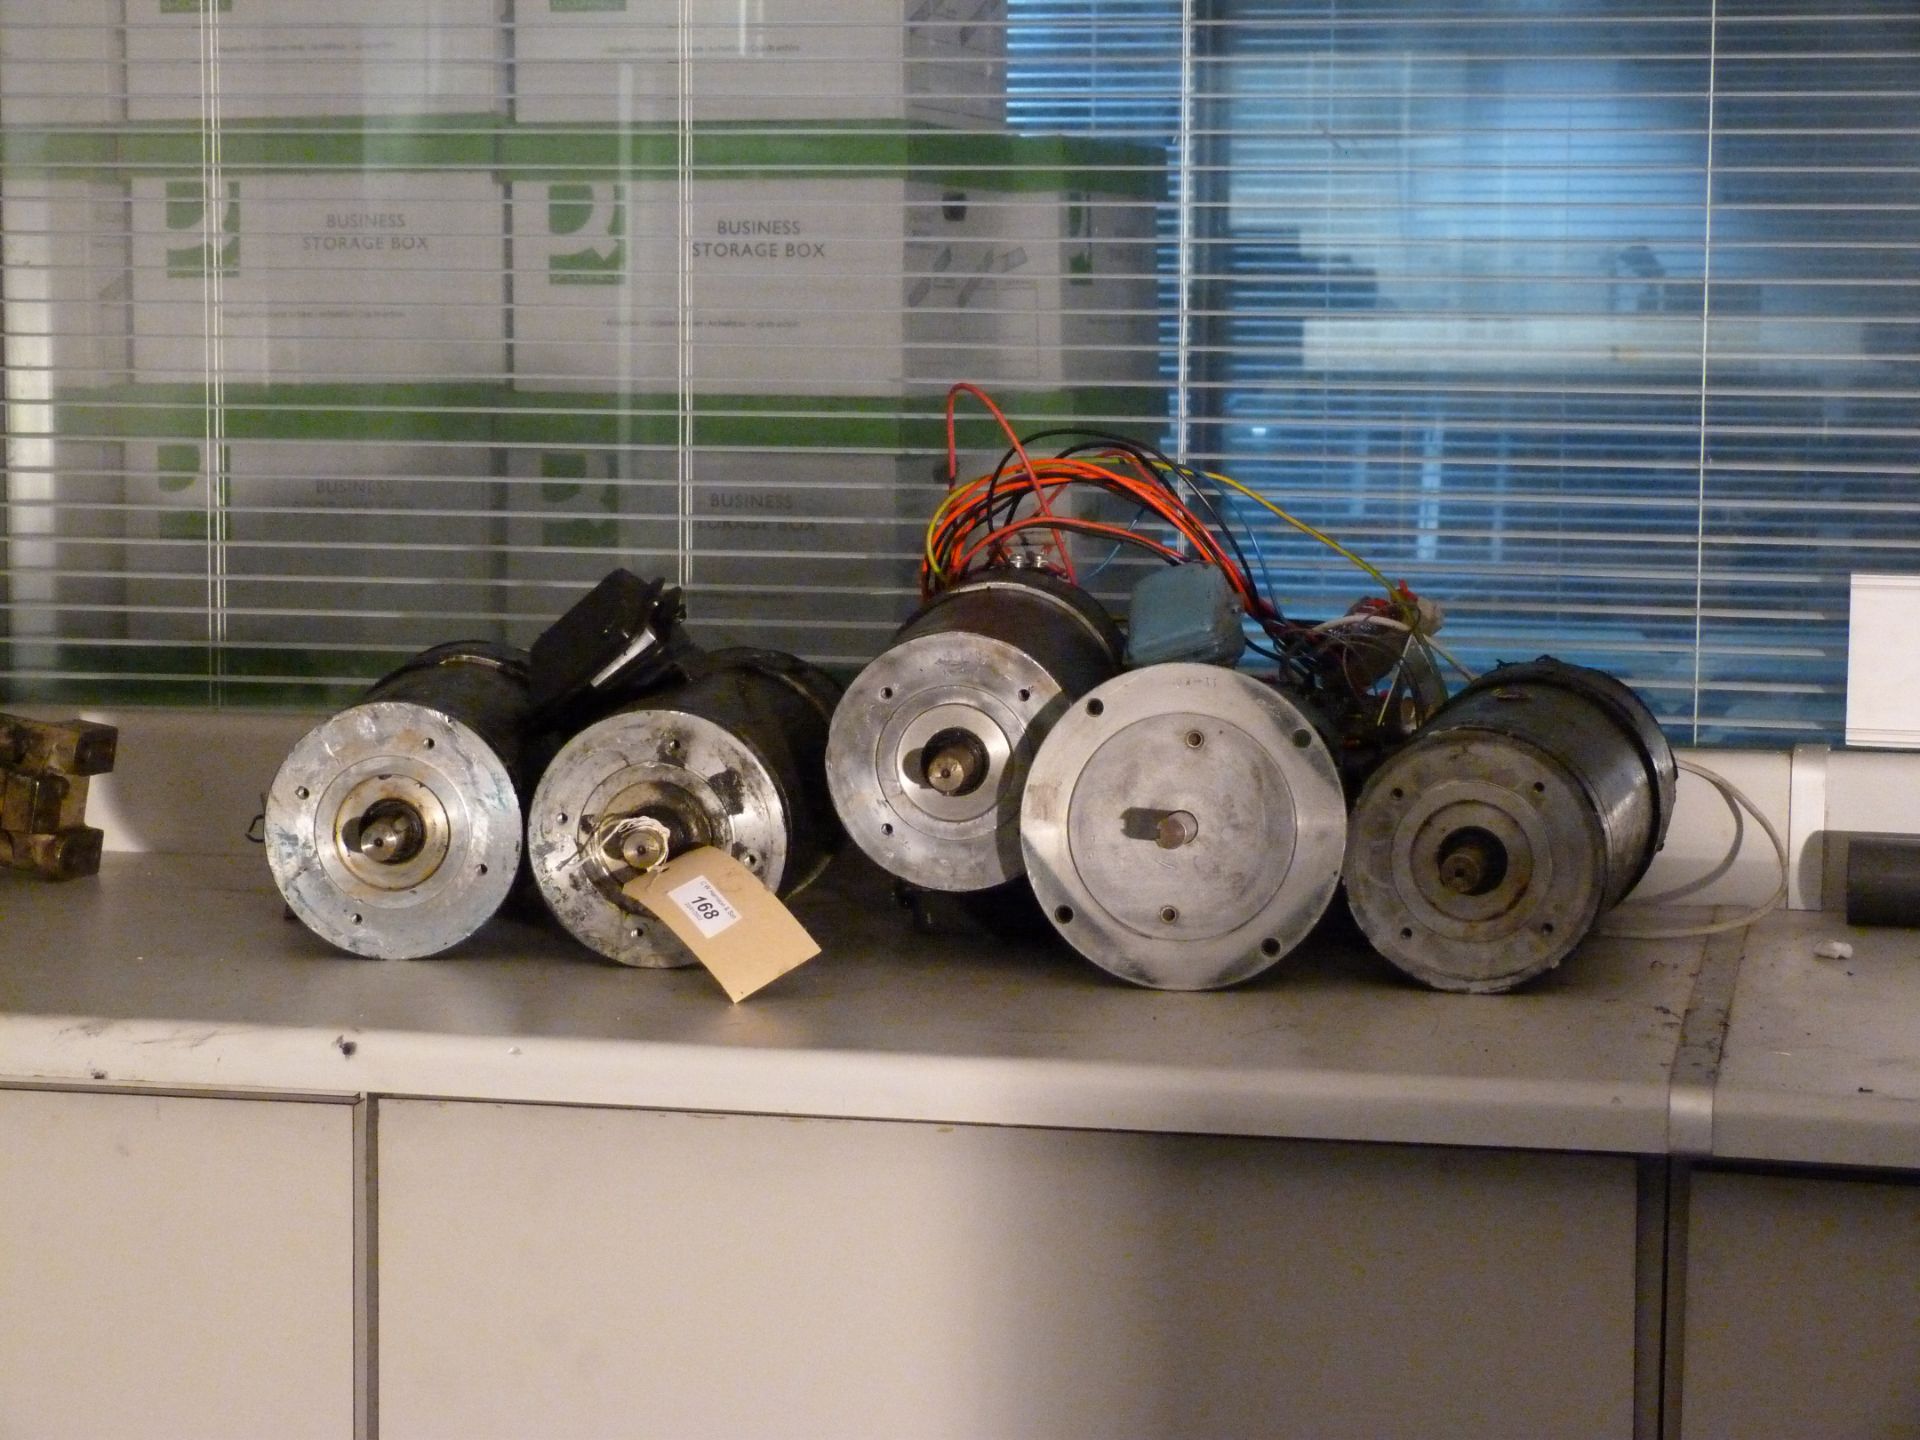 Five electric motors